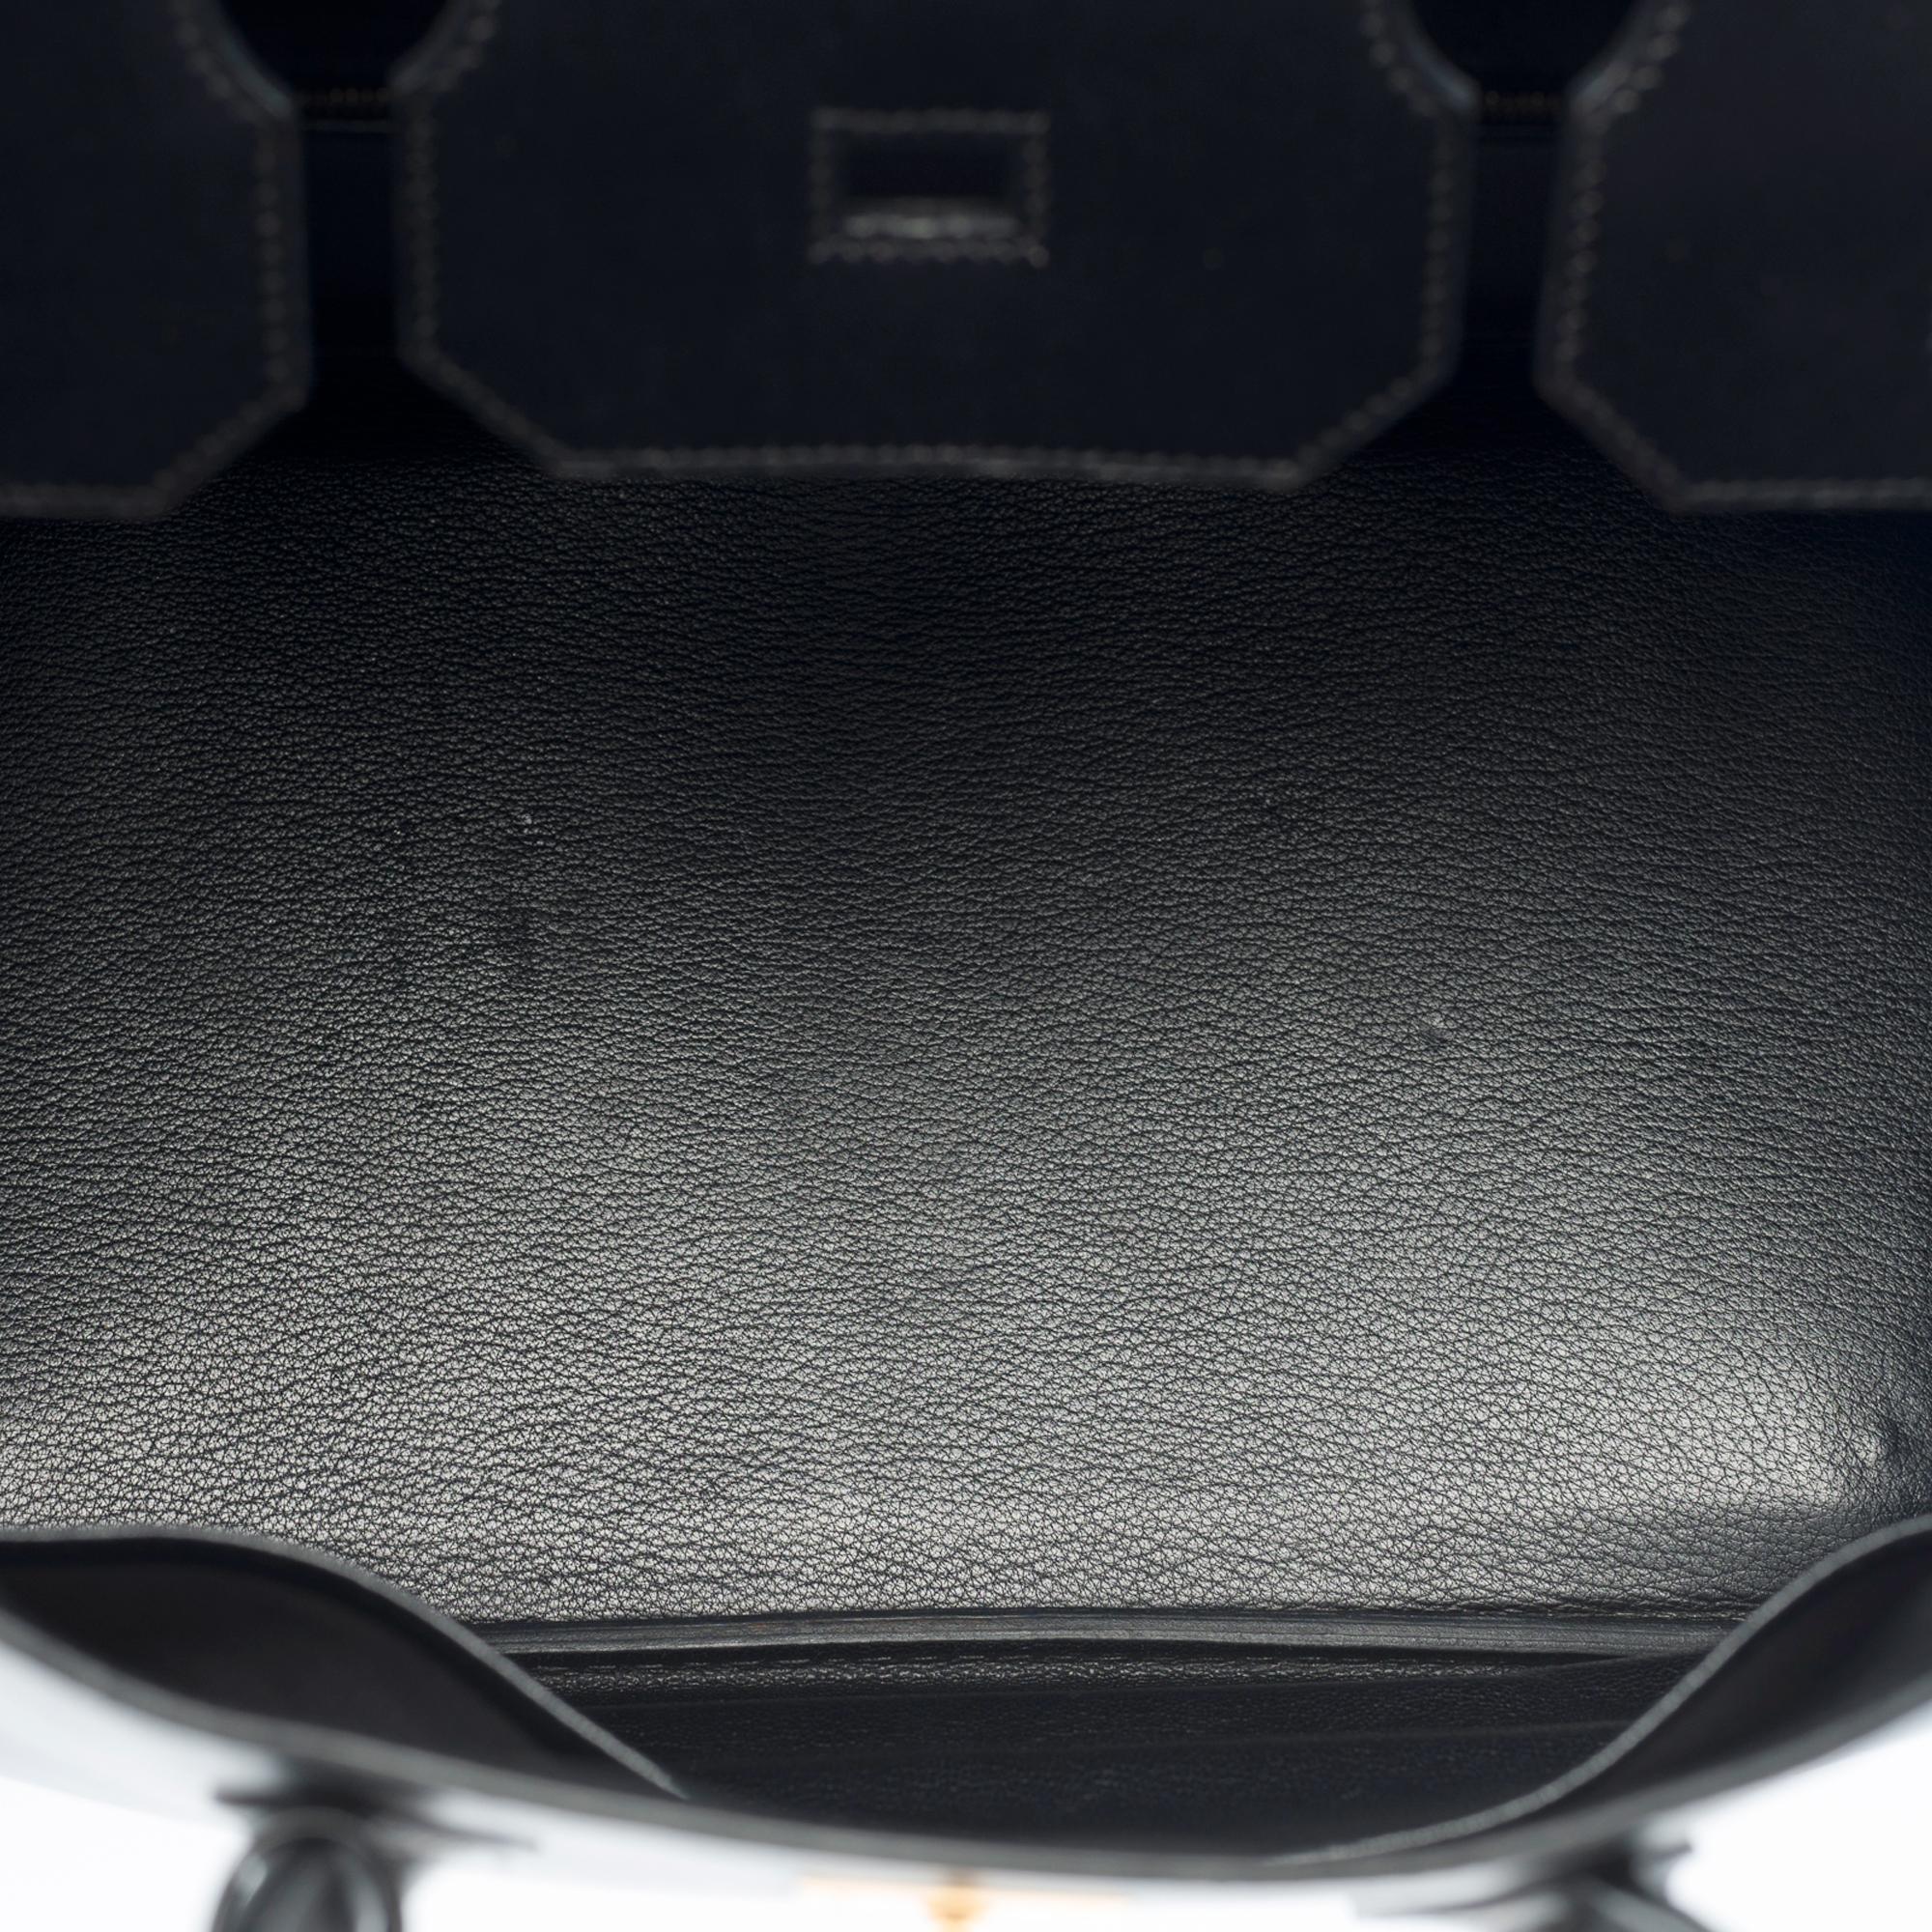 Amazing & Rare Hermès Birkin 35 handbag in black box calfskin leather, GHW 1